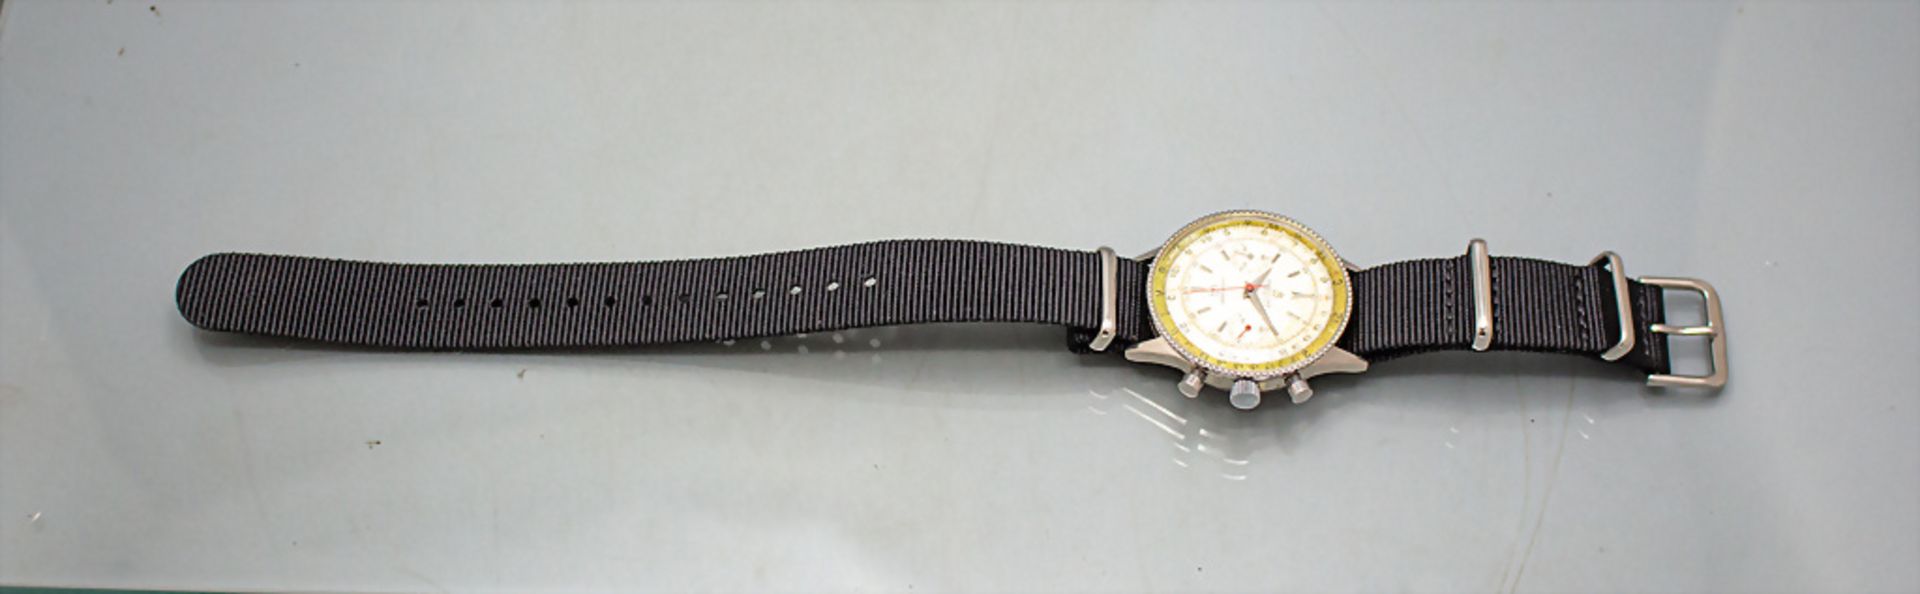 Breitling Chronomat, Schweiz/Swiss, 1961 - Image 10 of 11